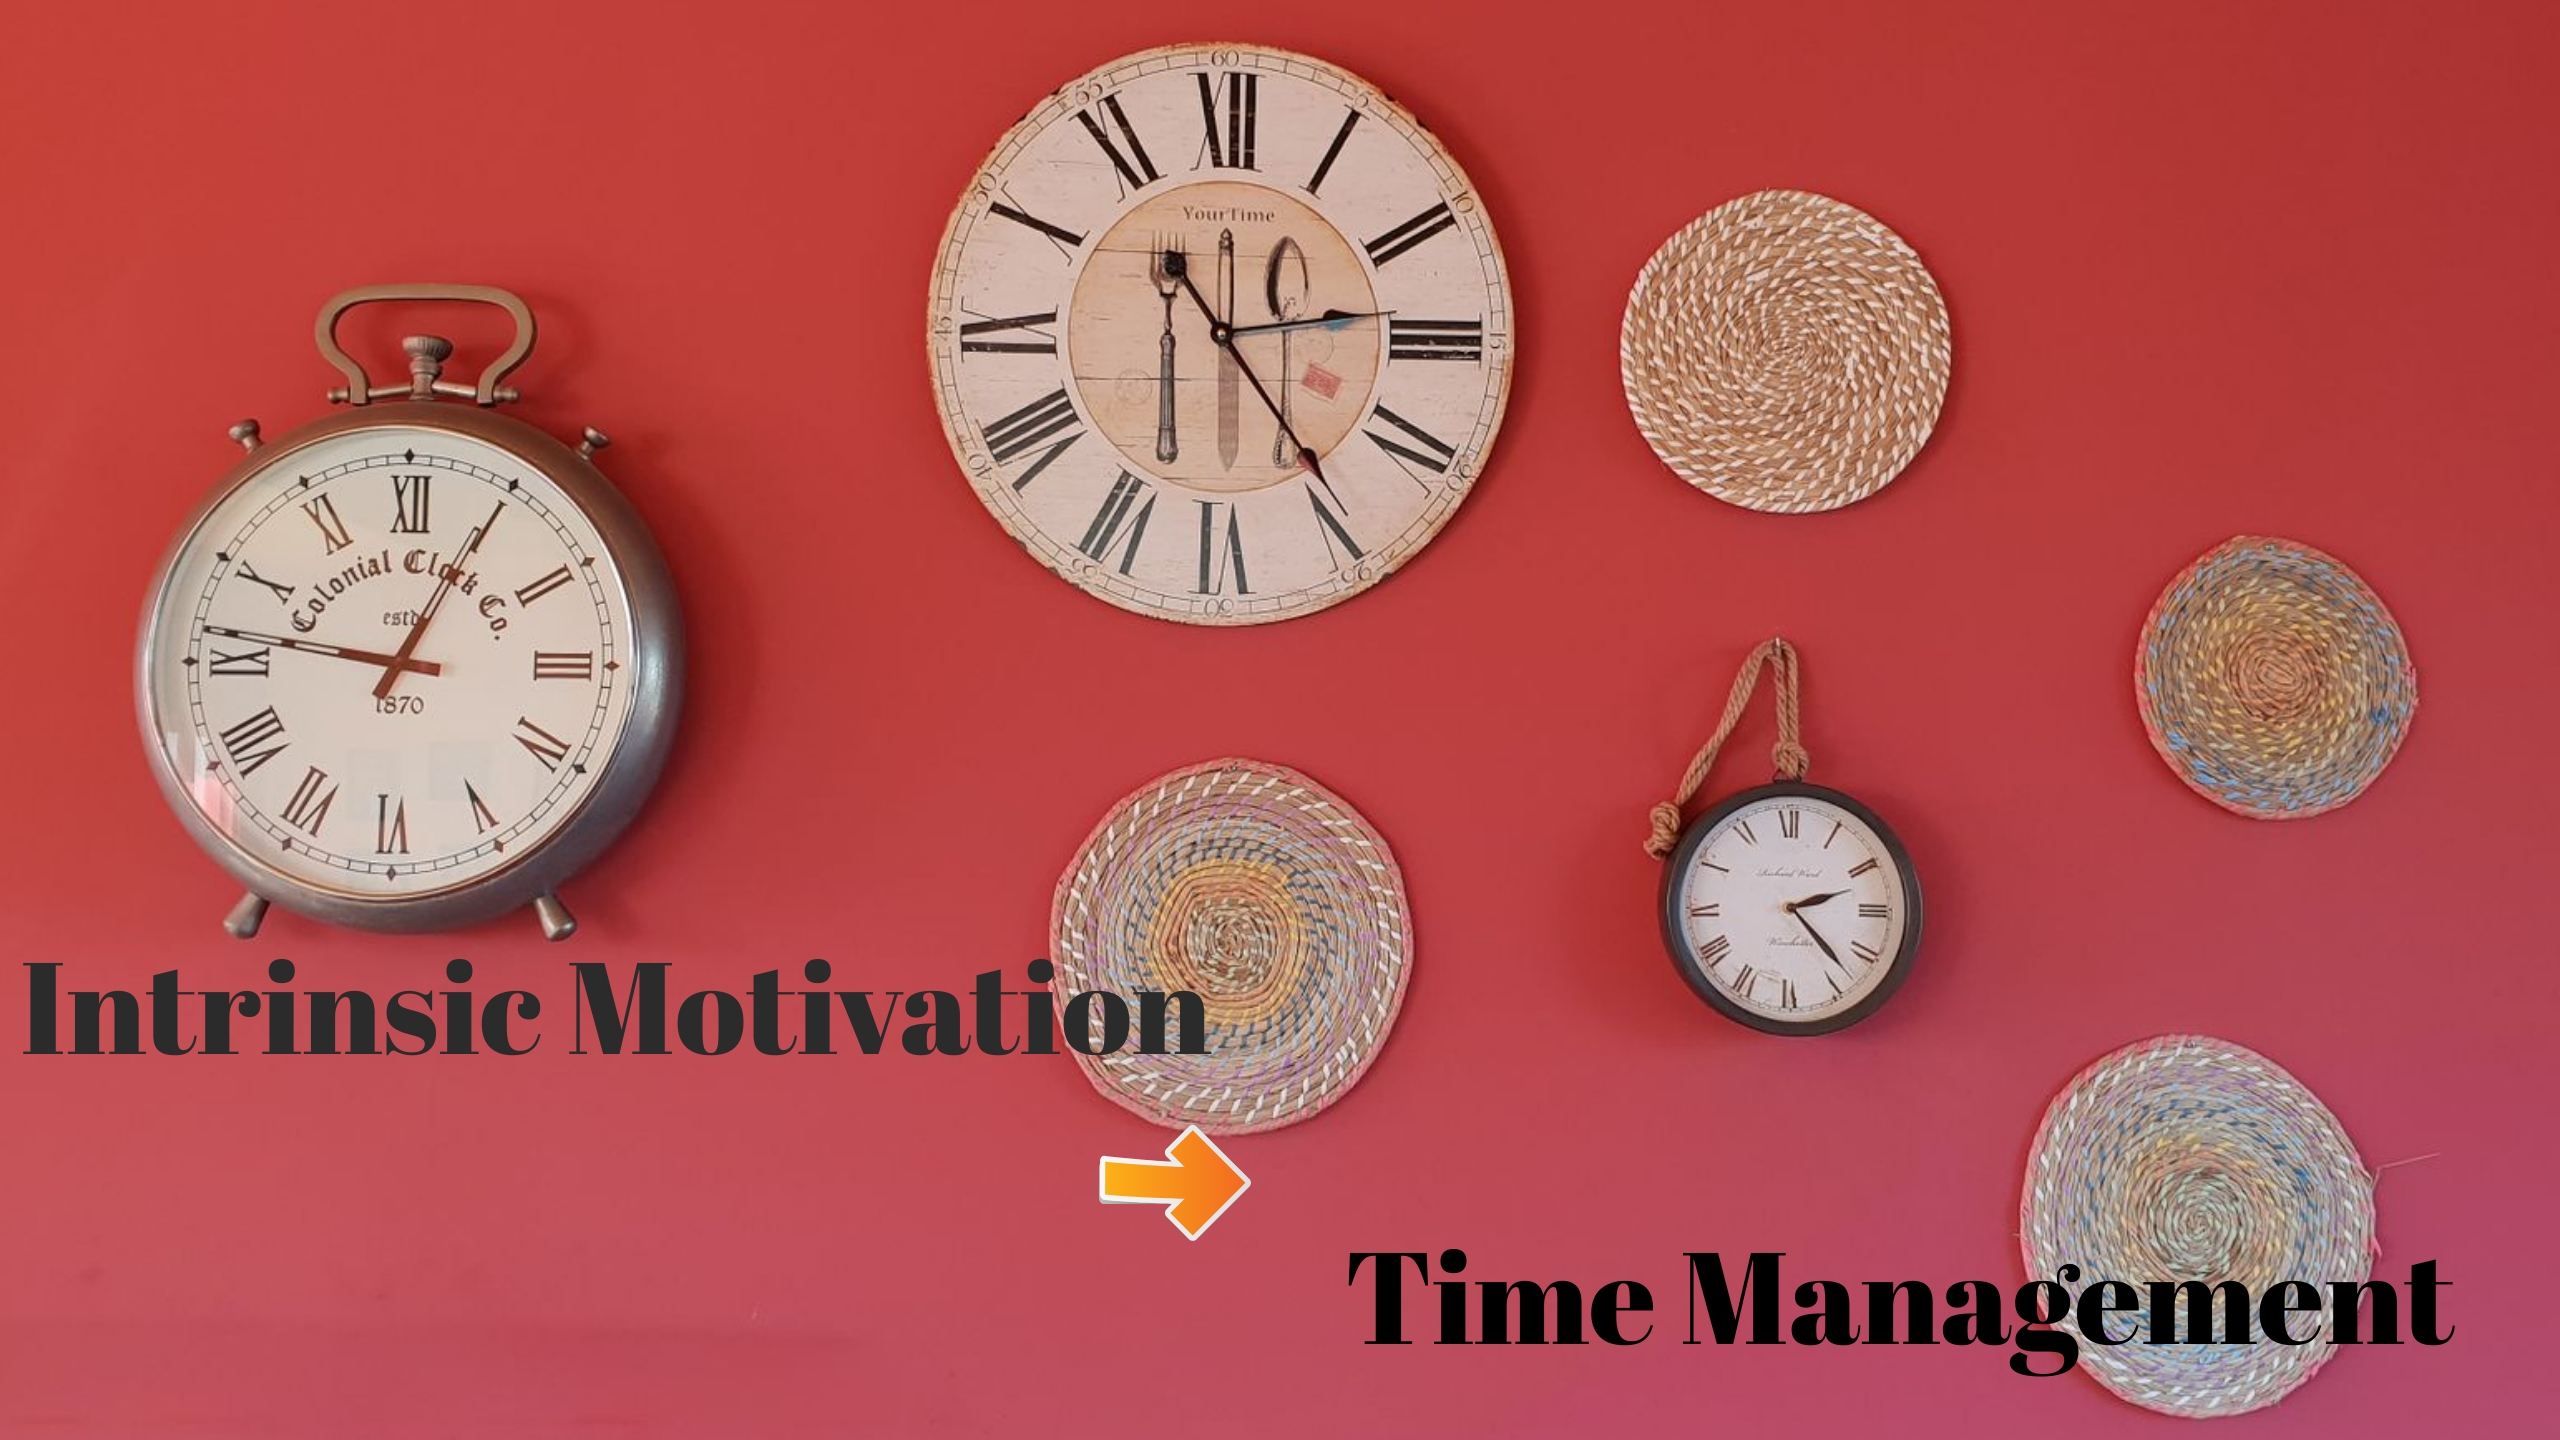 Define intrinsic motivation in managing time